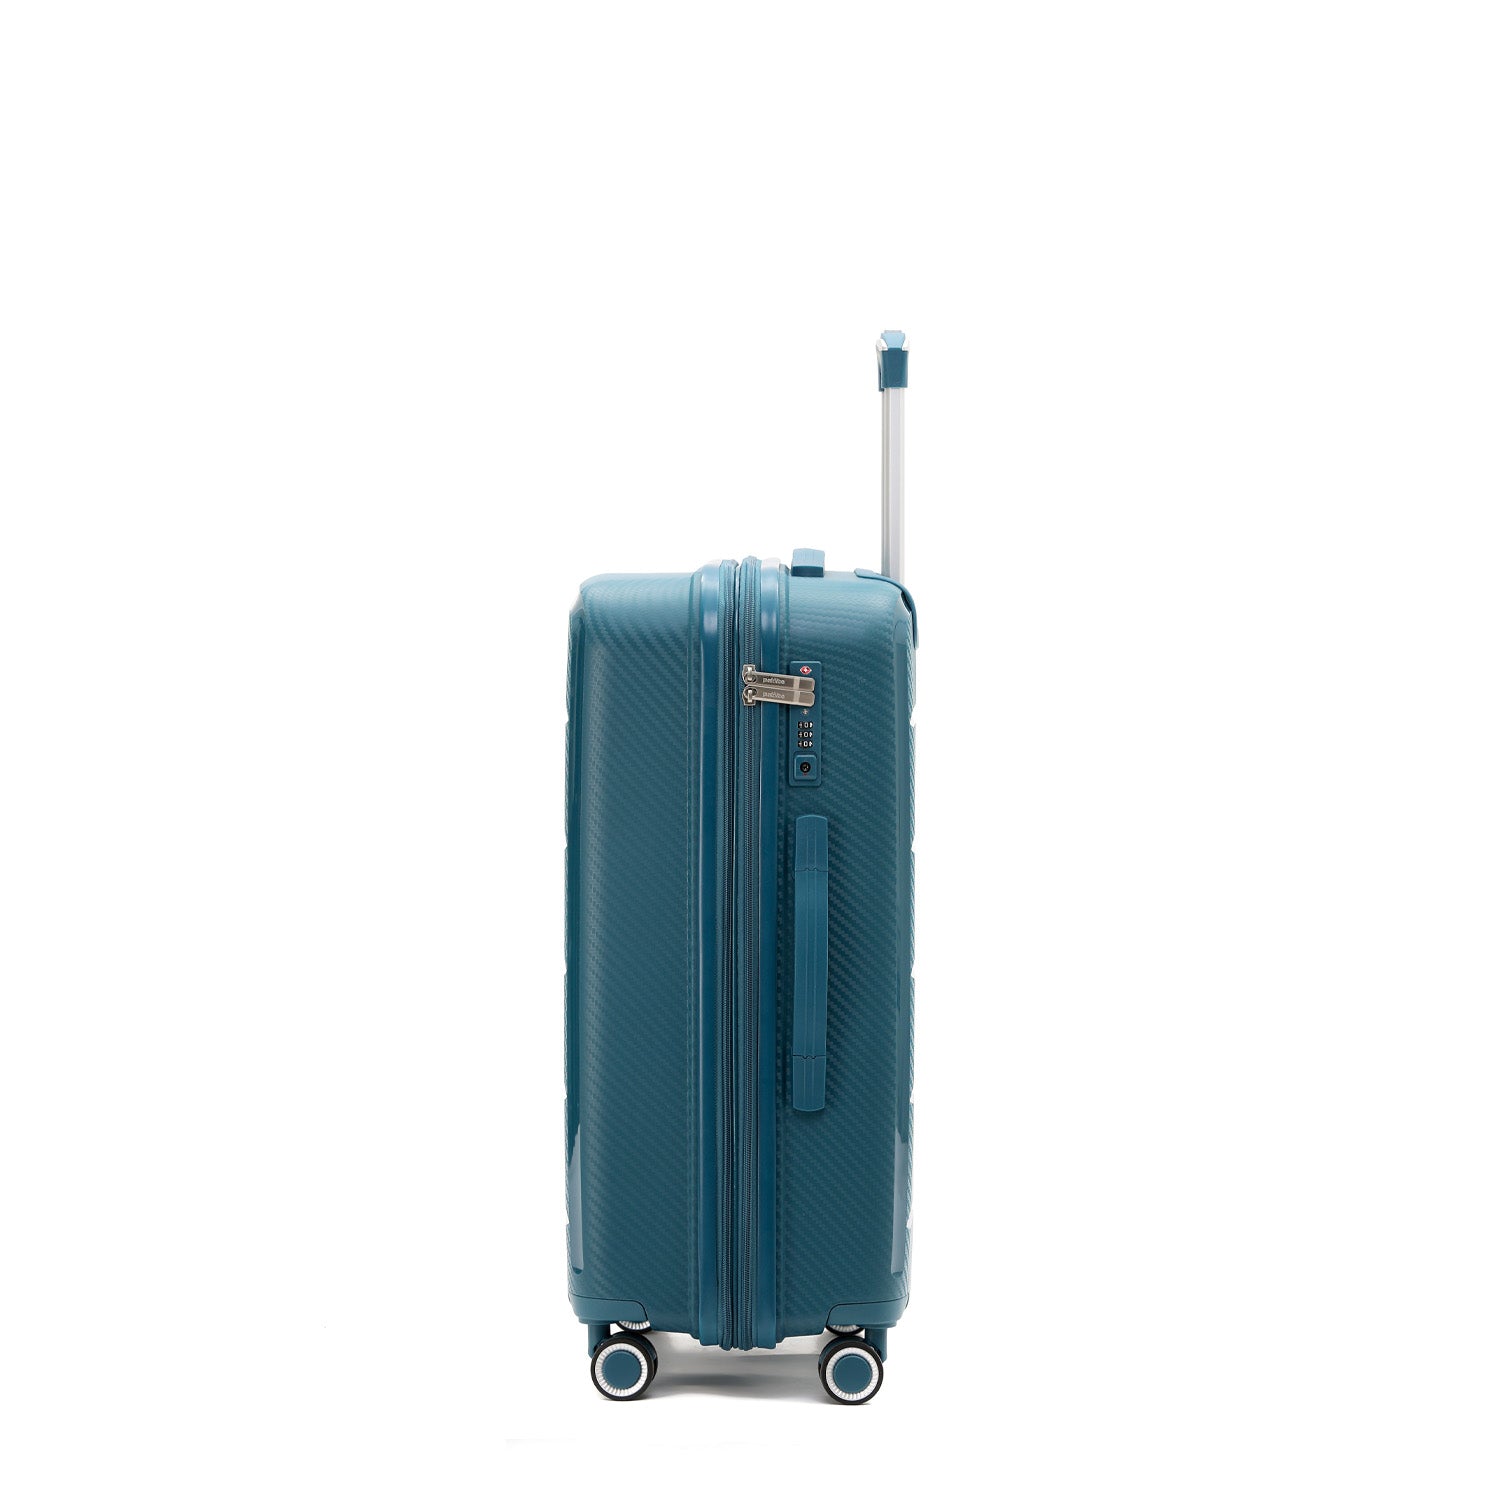 Paklite - PA7350 Set of 3 Suitcases - Blue-13